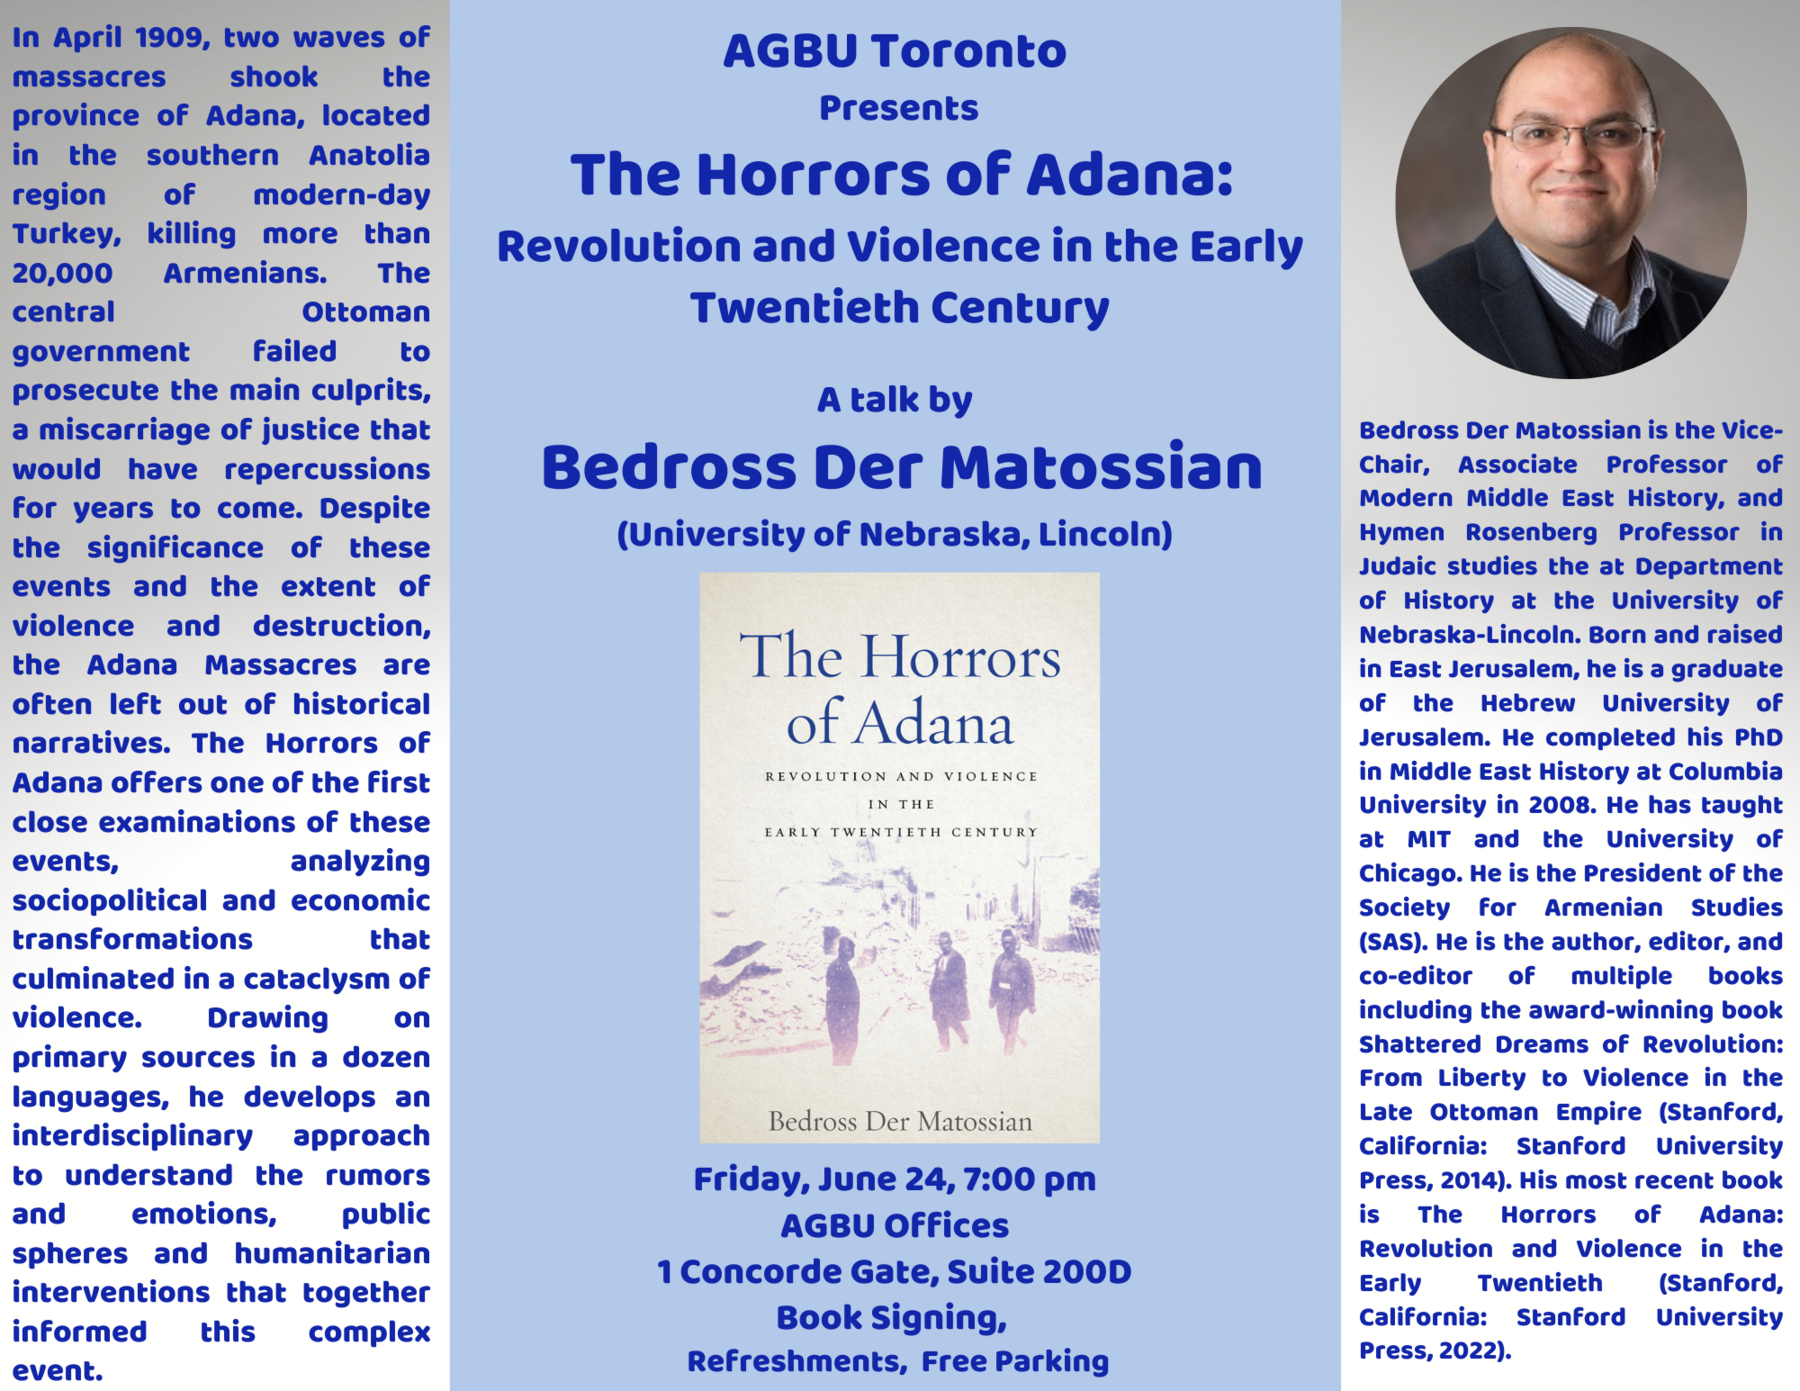 Horrors of Adana by Bedross Der Matossian